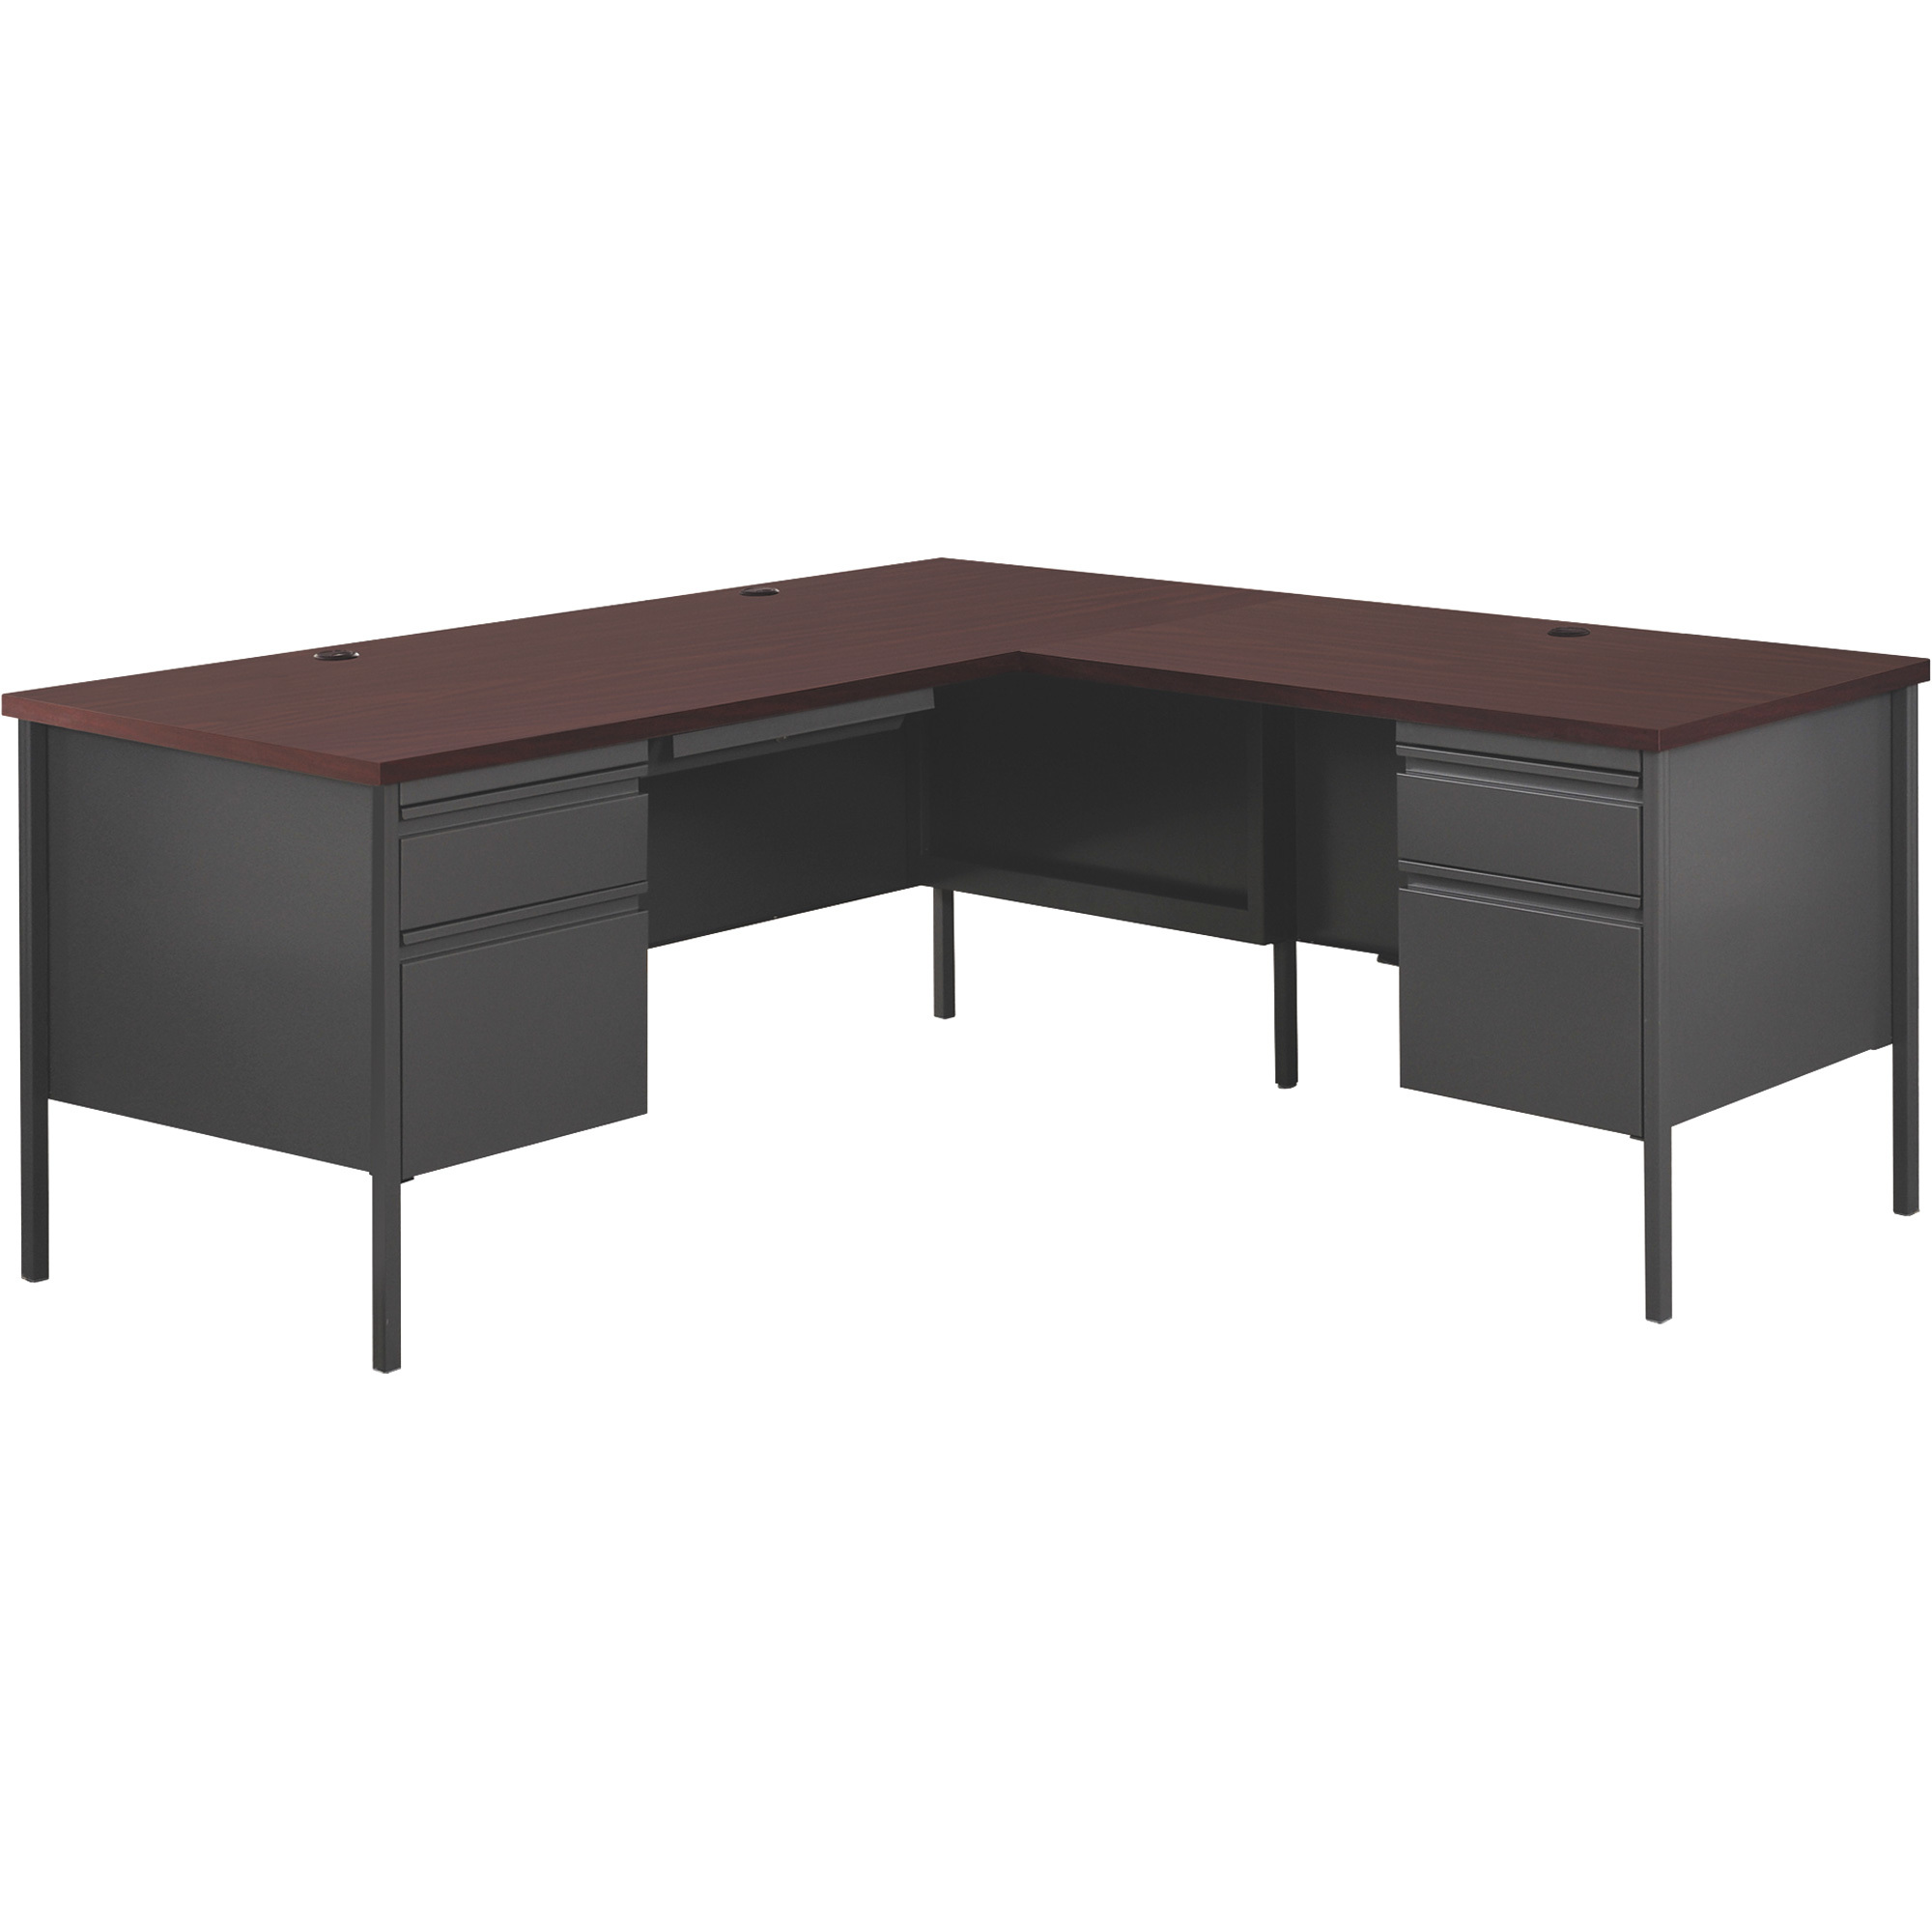 Hirsh Industries Right-Hand L-Shape Desk â Charcoal/Mahogany, 66Inch W x 72Inch D x 29 1/2Inch H, Model 20106